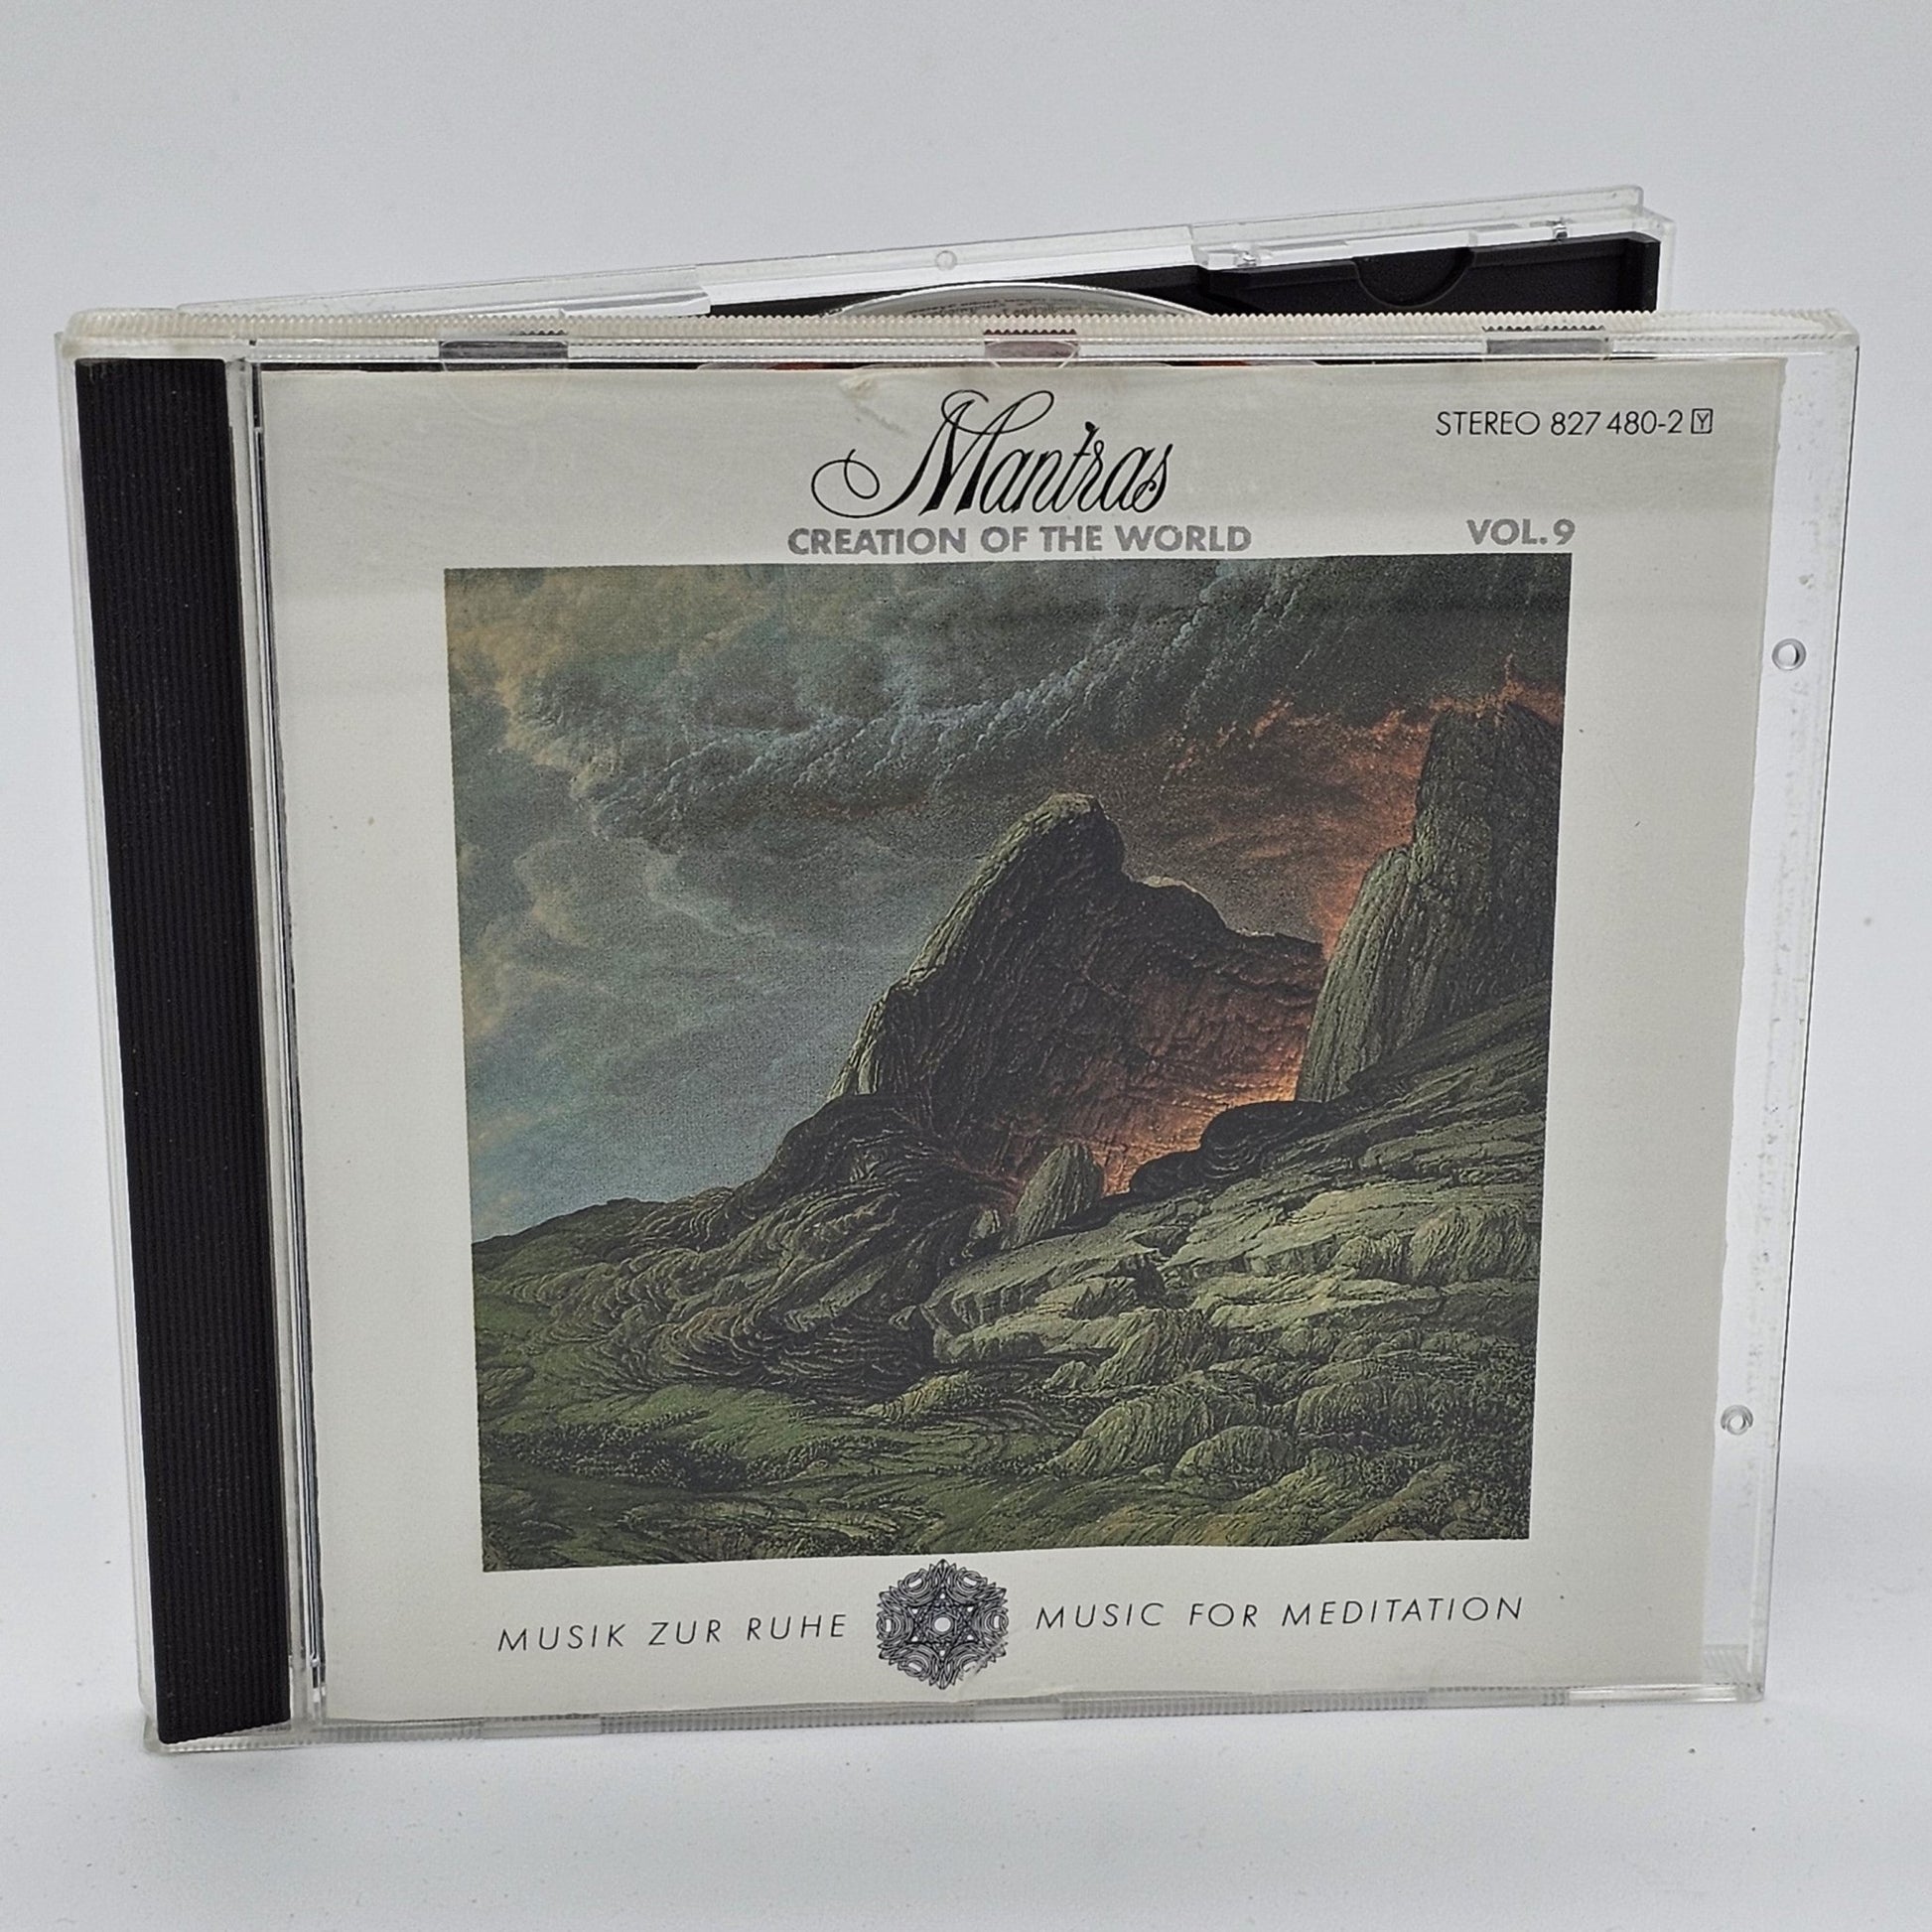 Polydor Records - Muzik Zur Ruhe Vol. 9 | Mantras Creation Of The World | CD - Compact Disc - Steady Bunny Shop